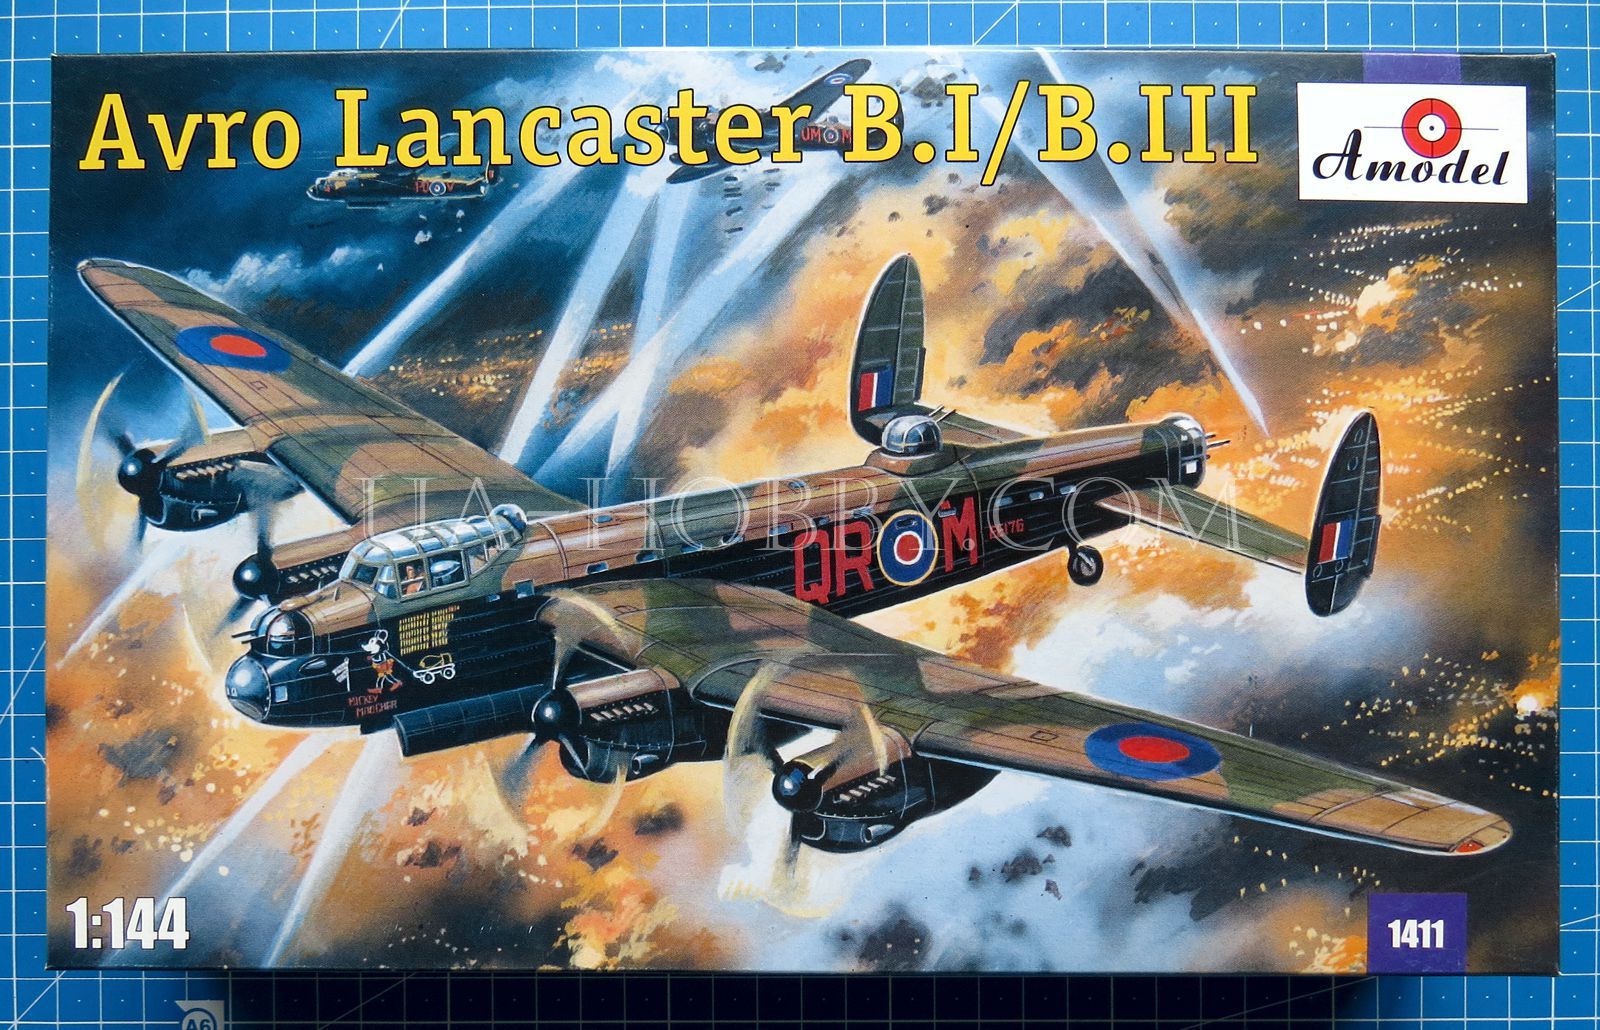 1/144 Avro Lancaster B.I/B.III. Amodel 1411